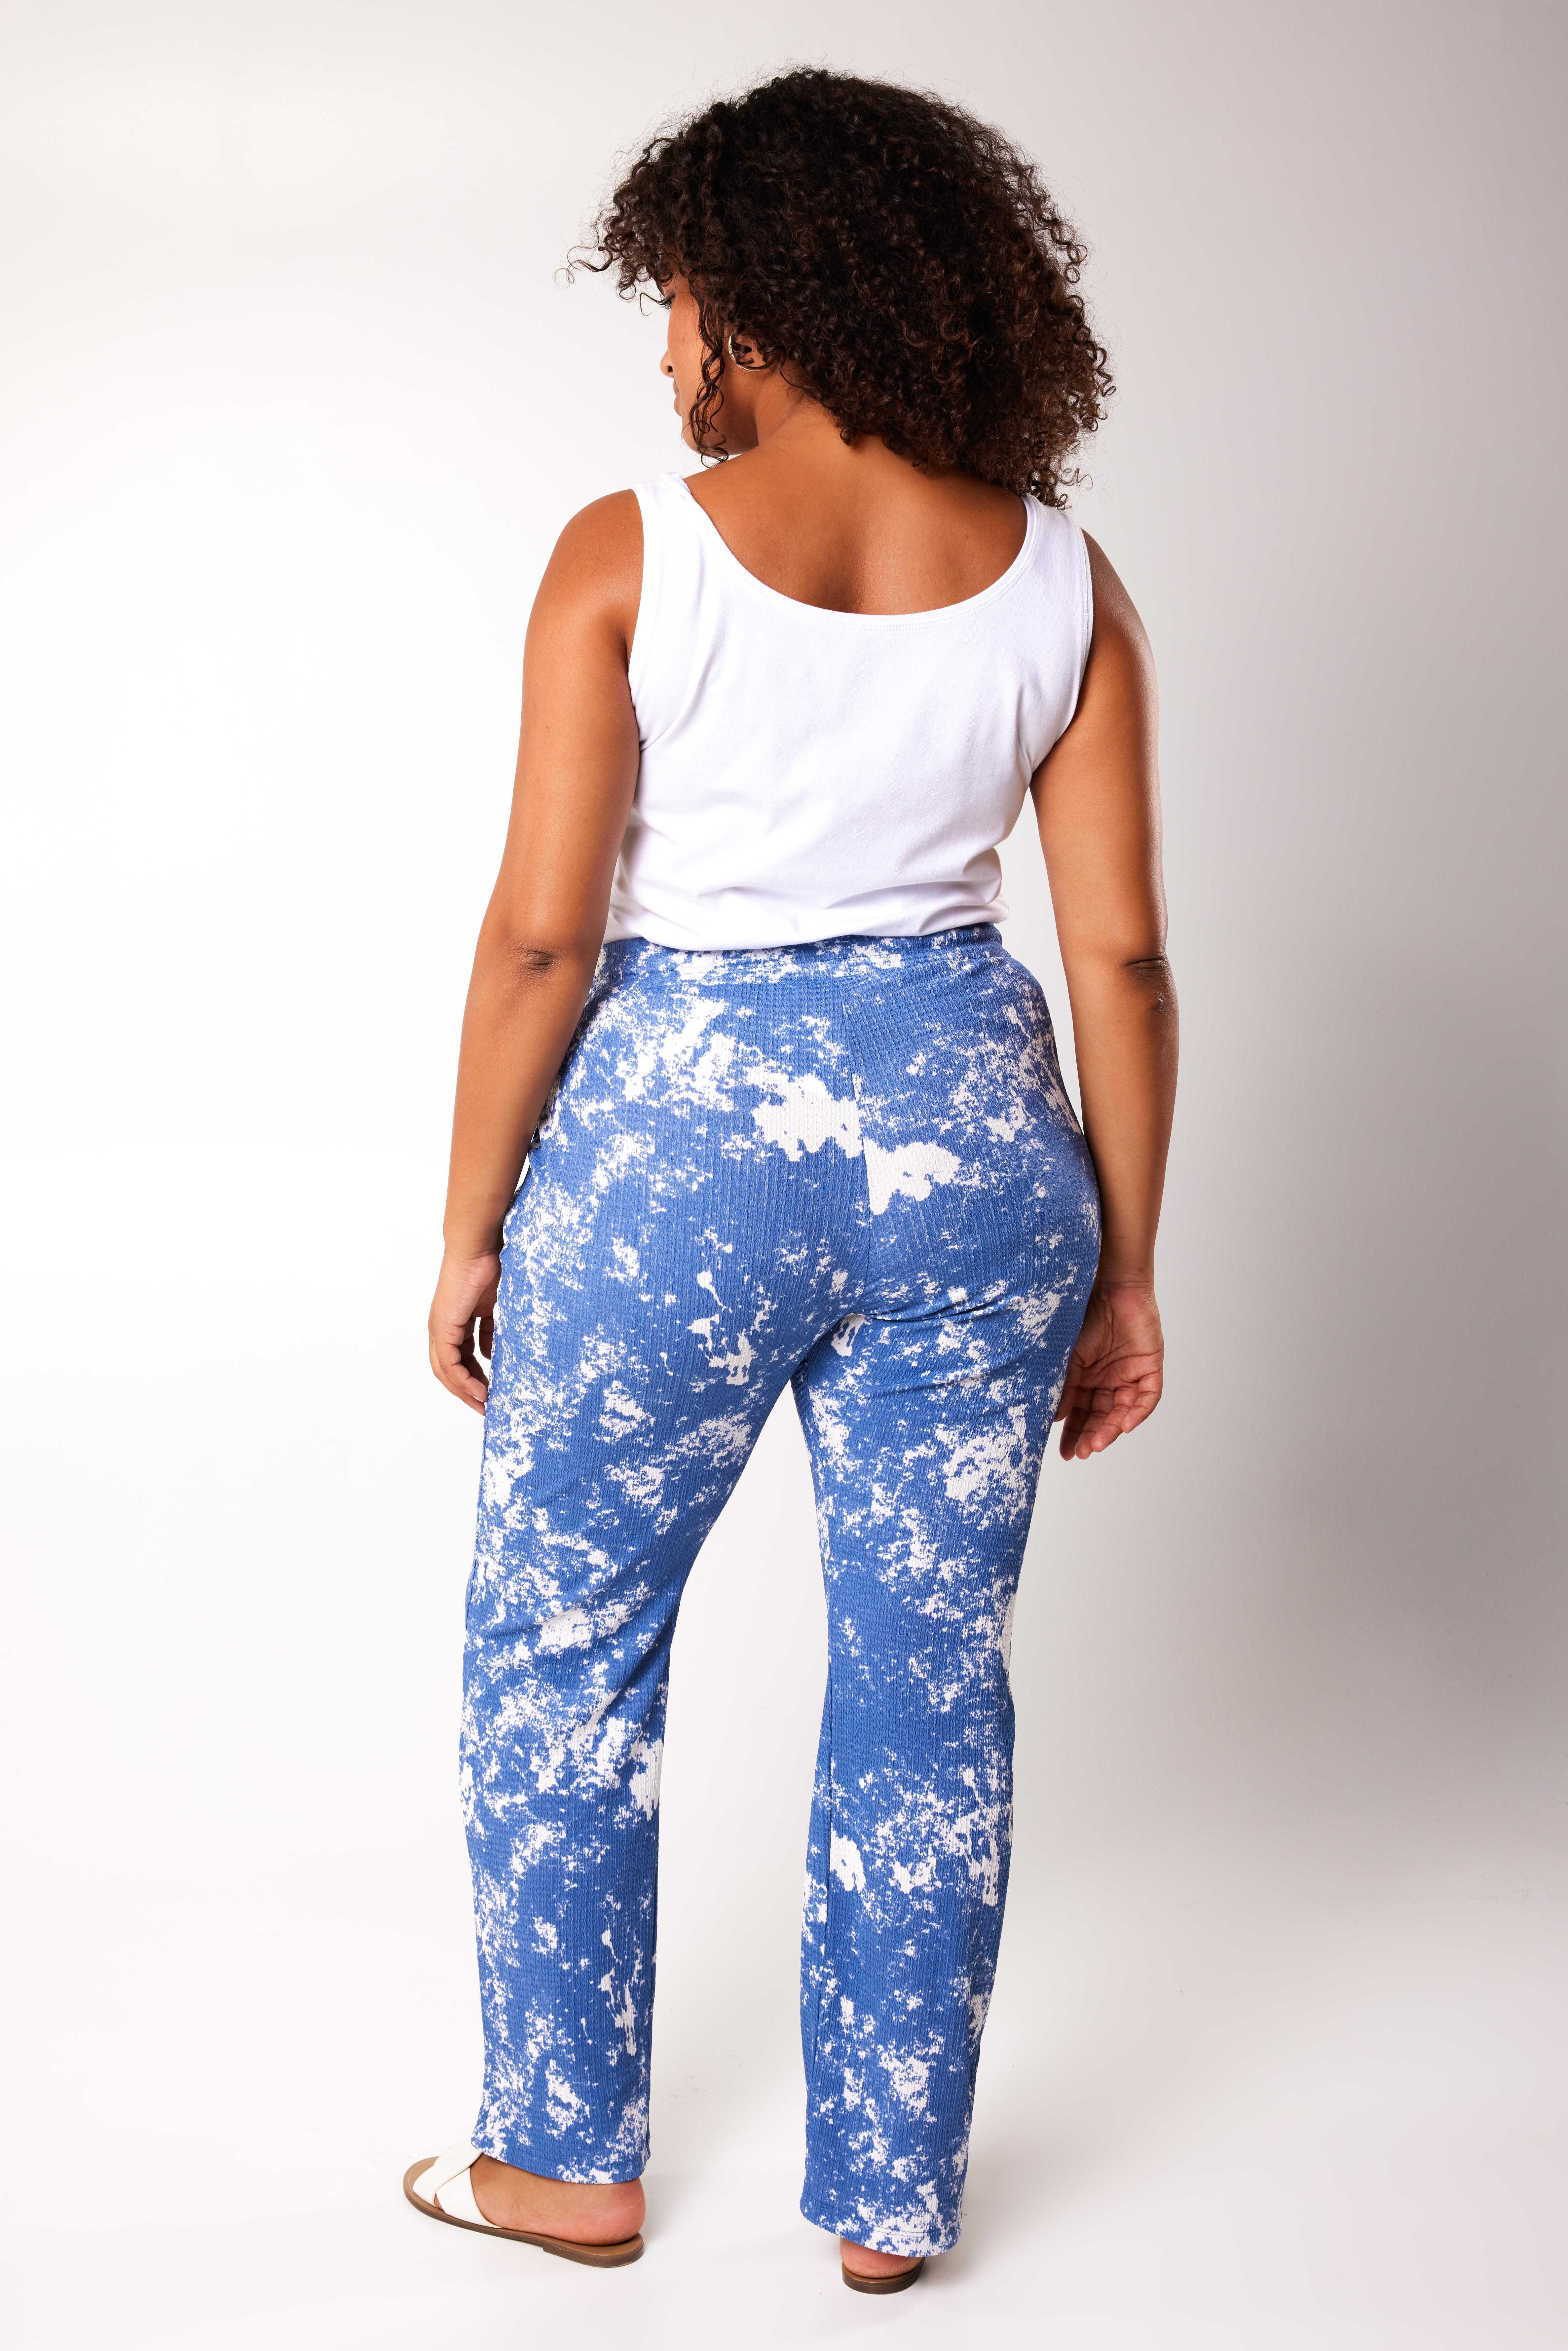 Damen Hose mit Batik-Print Multi Aqua-Blau | MS Mode